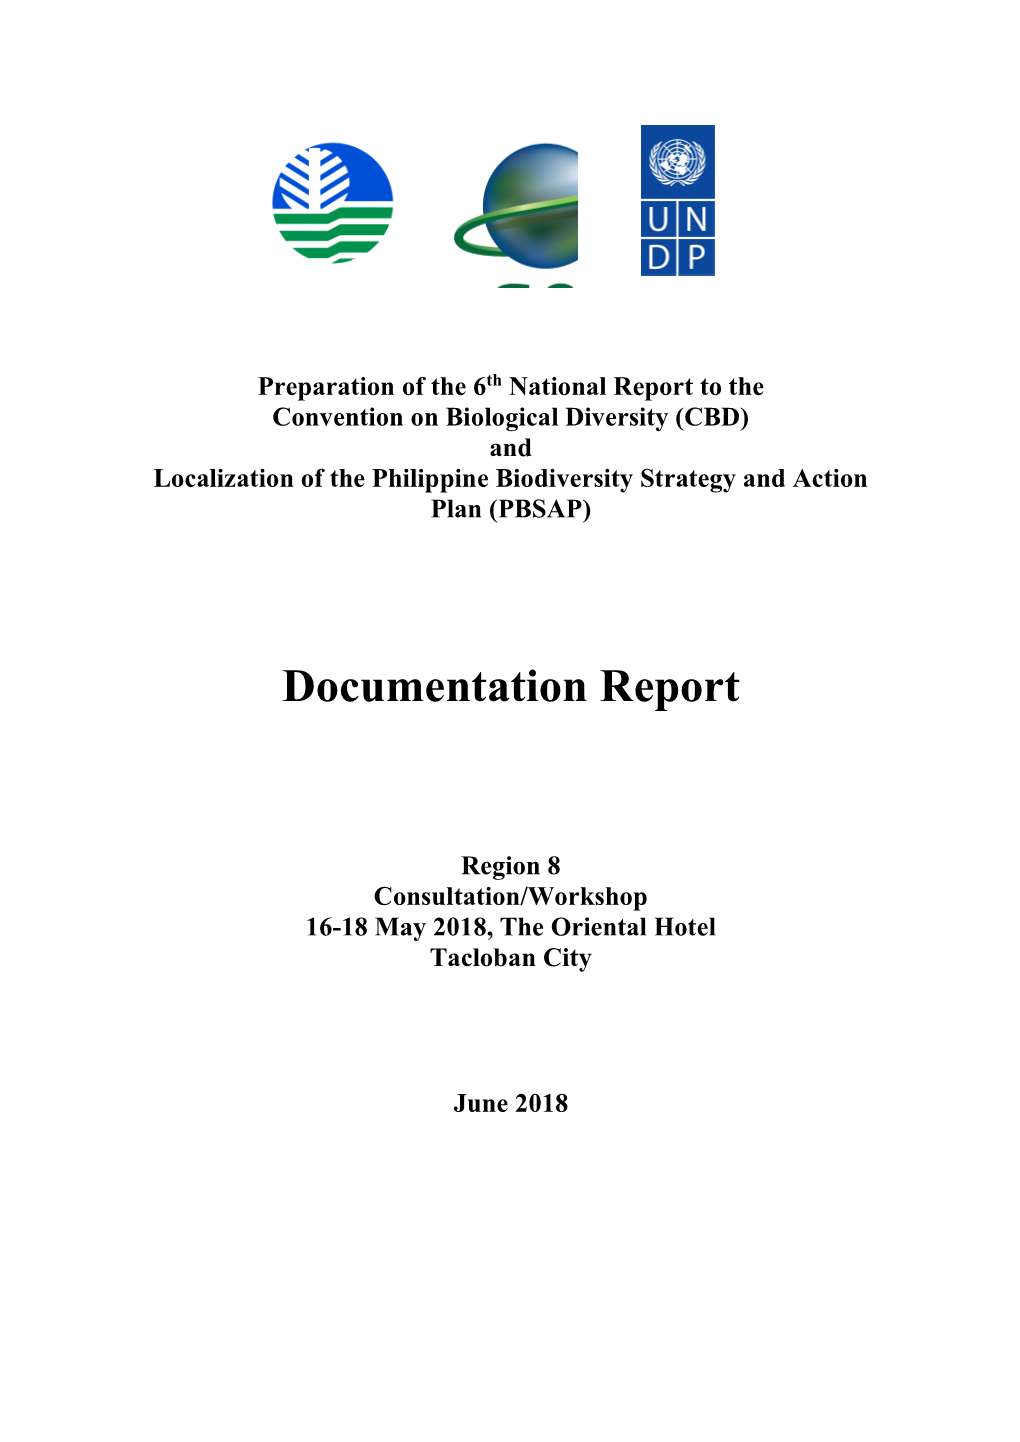 Documentation Report